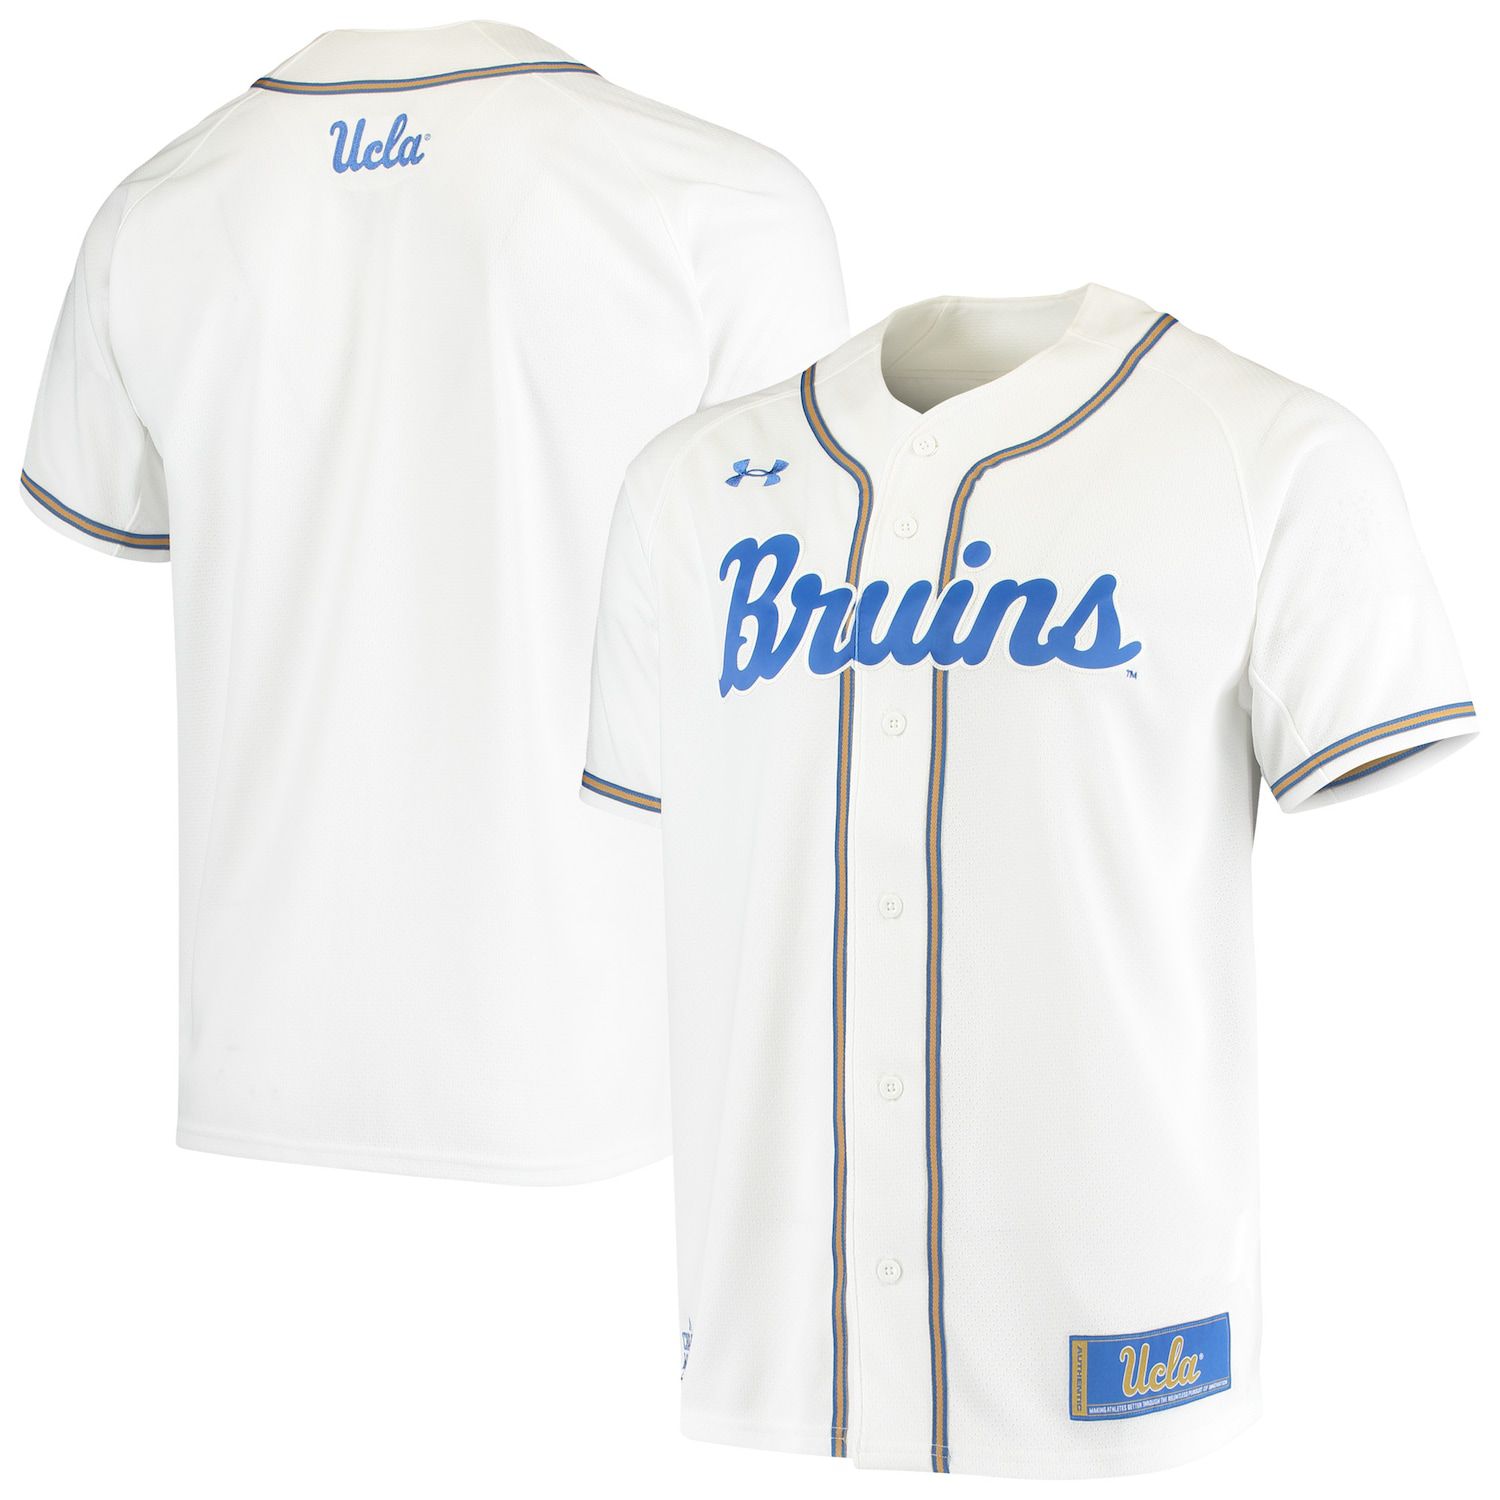 ucla bruins baseball jersey